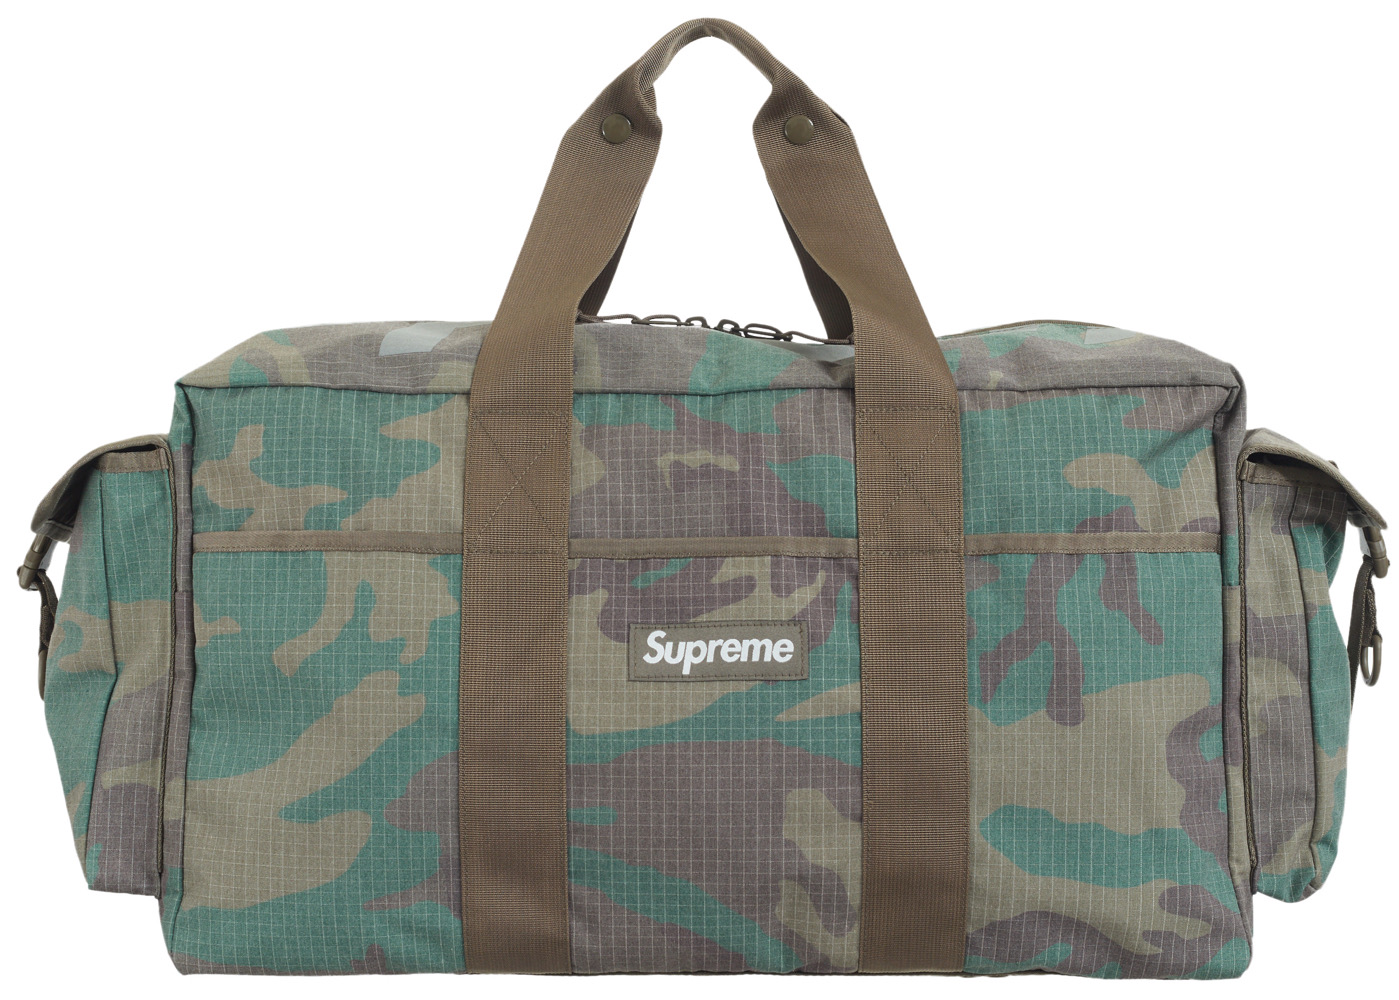 Supreme 24SS Backpack 